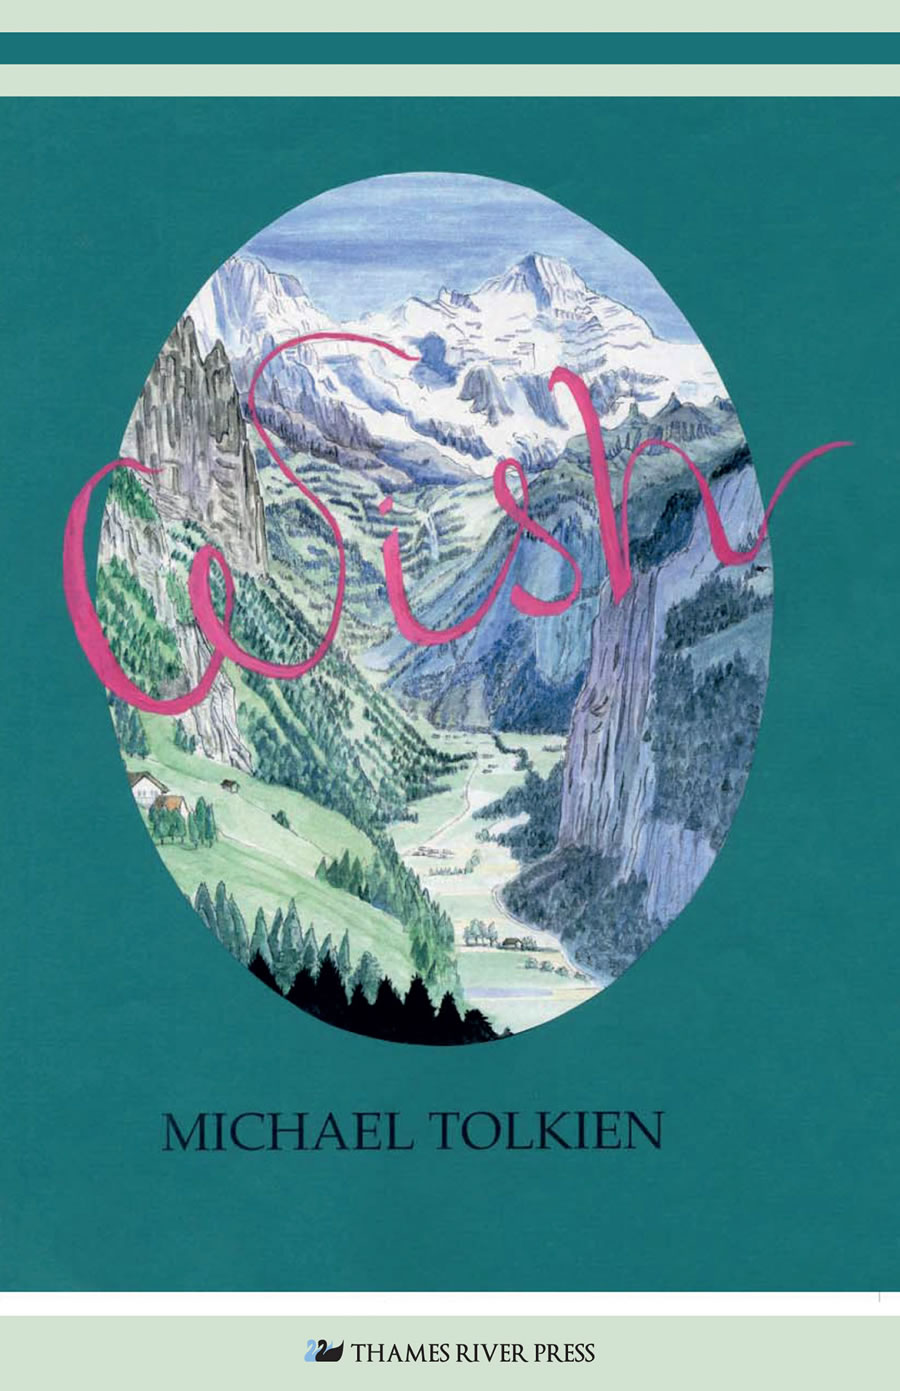 Wish by Michael Tolkien